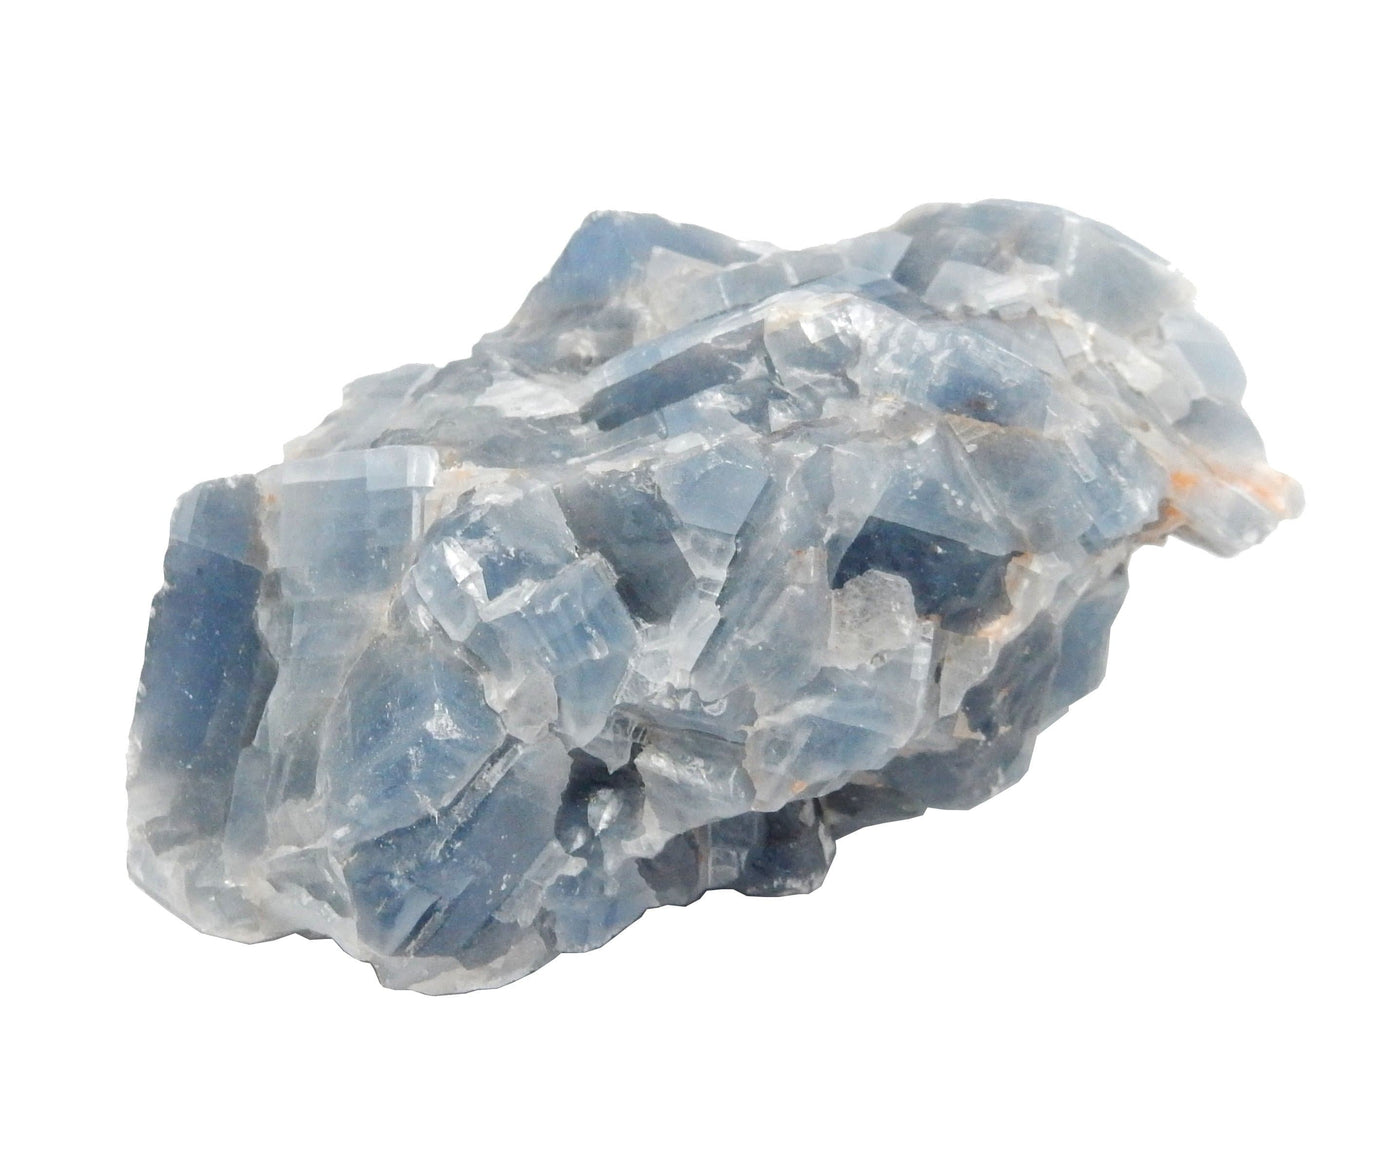 Up close shot of blue calcite stone on white background